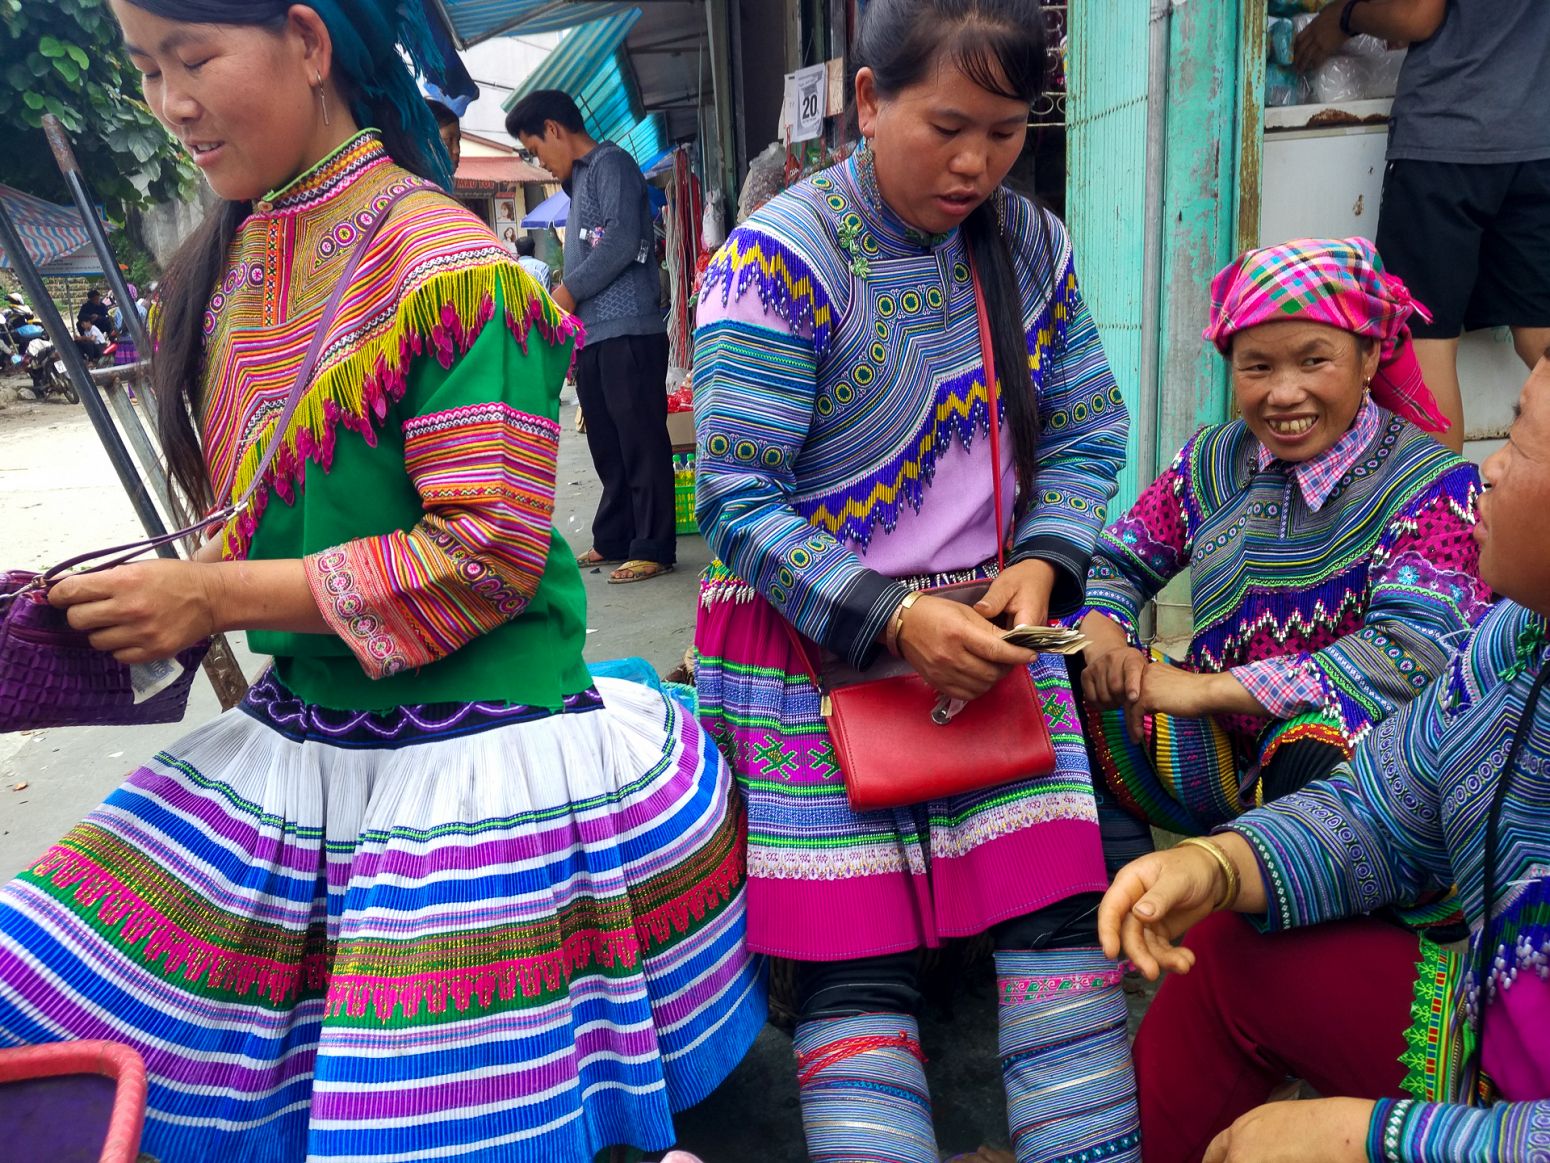 Hmong women at Bac Ha market, Vietnam